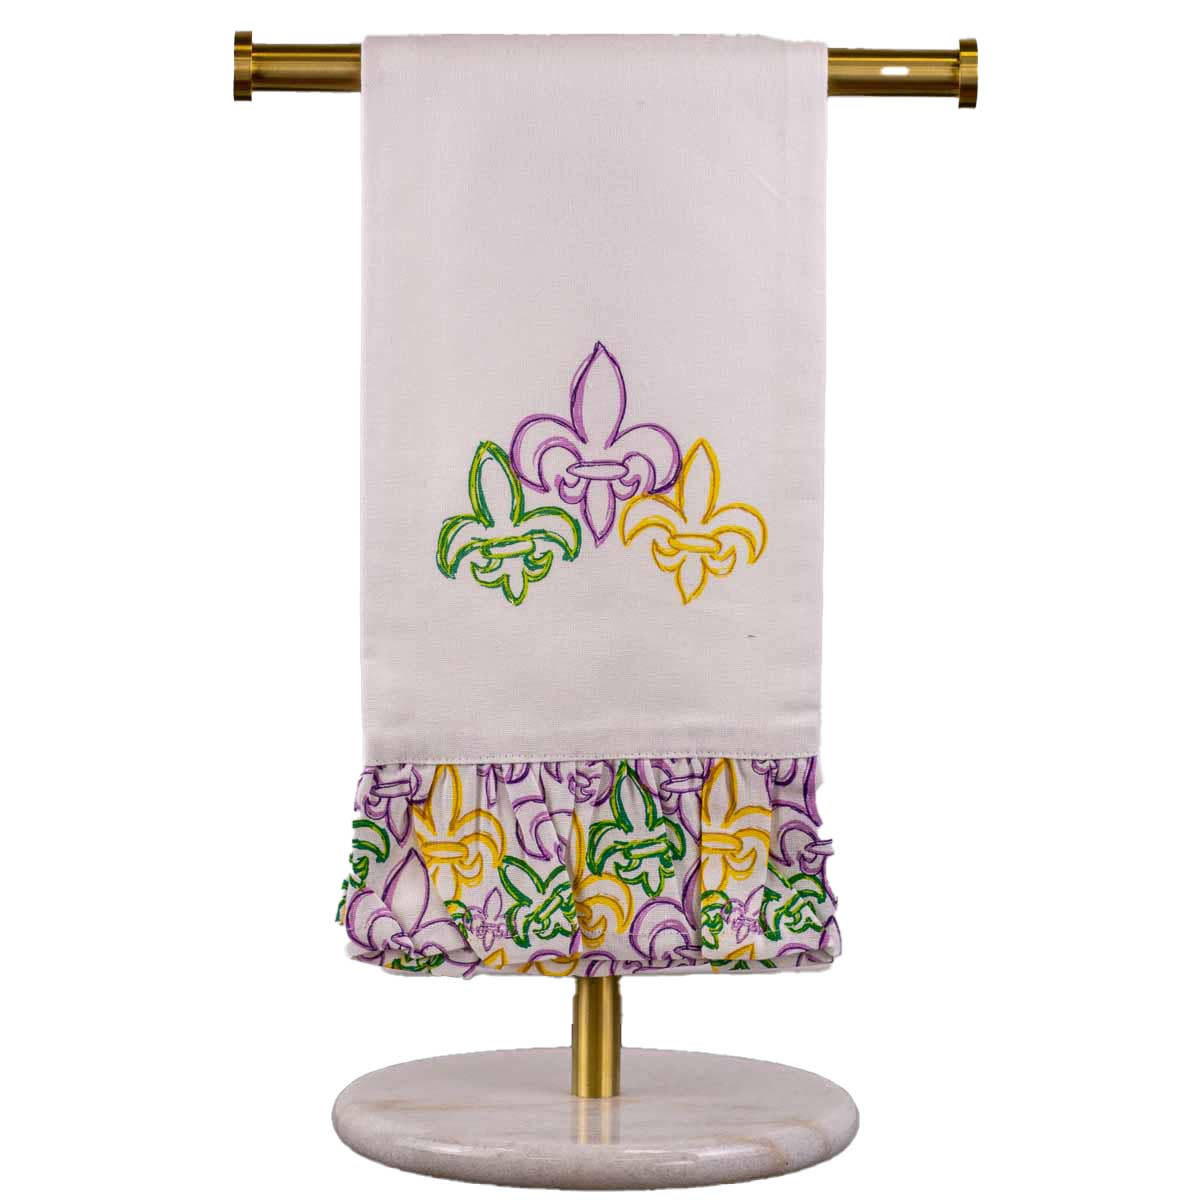 St. Charles Tri-Fleur Ruffle Hand Towel   White/Multi   20x28